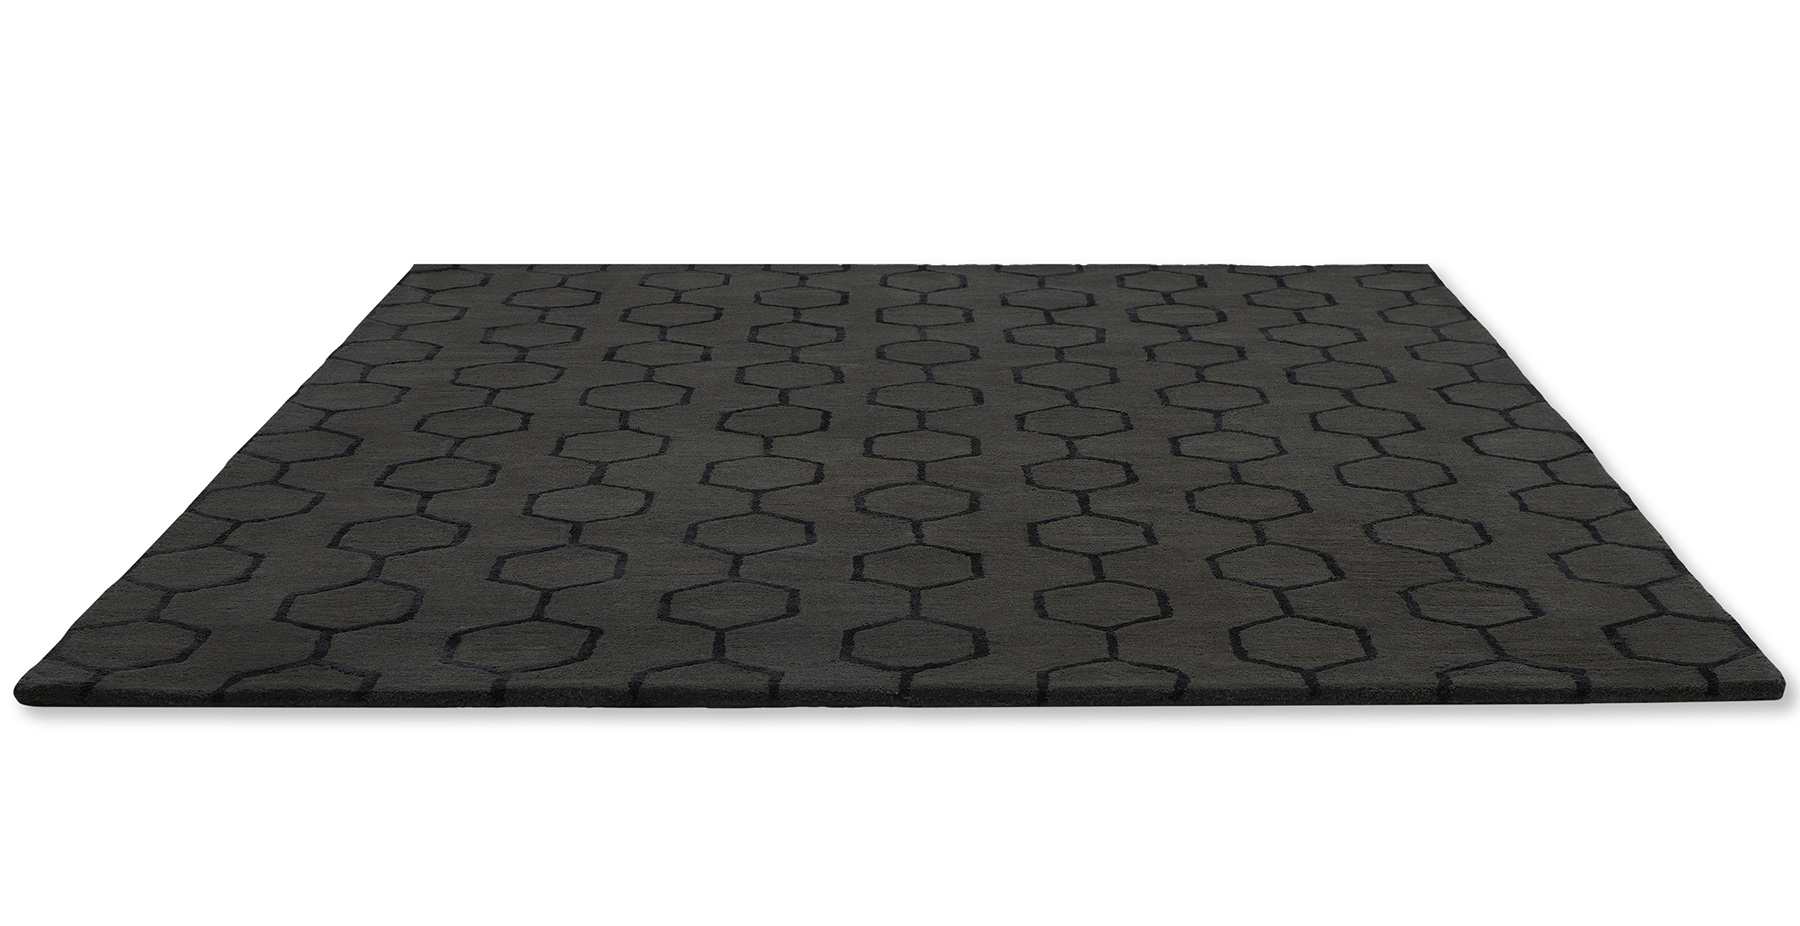 Geometric Noir Rug ☞ Size: 4' x 6' (120 x 180 cm)